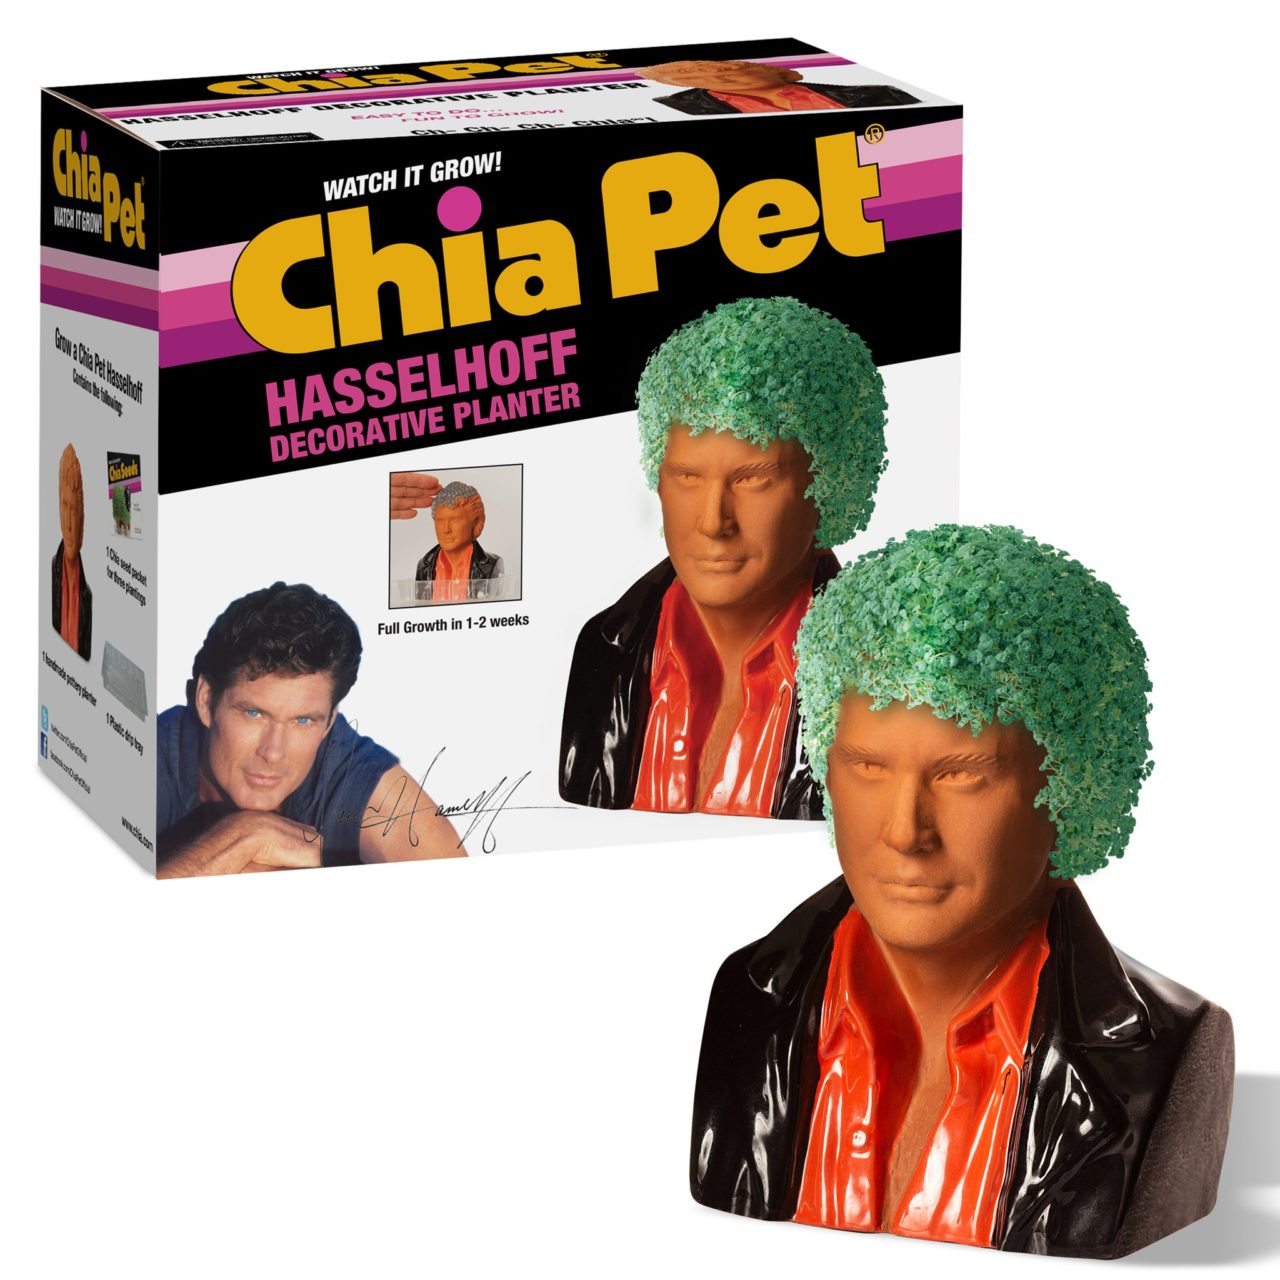 David Hasselhoff Product Image (Chia Pet)